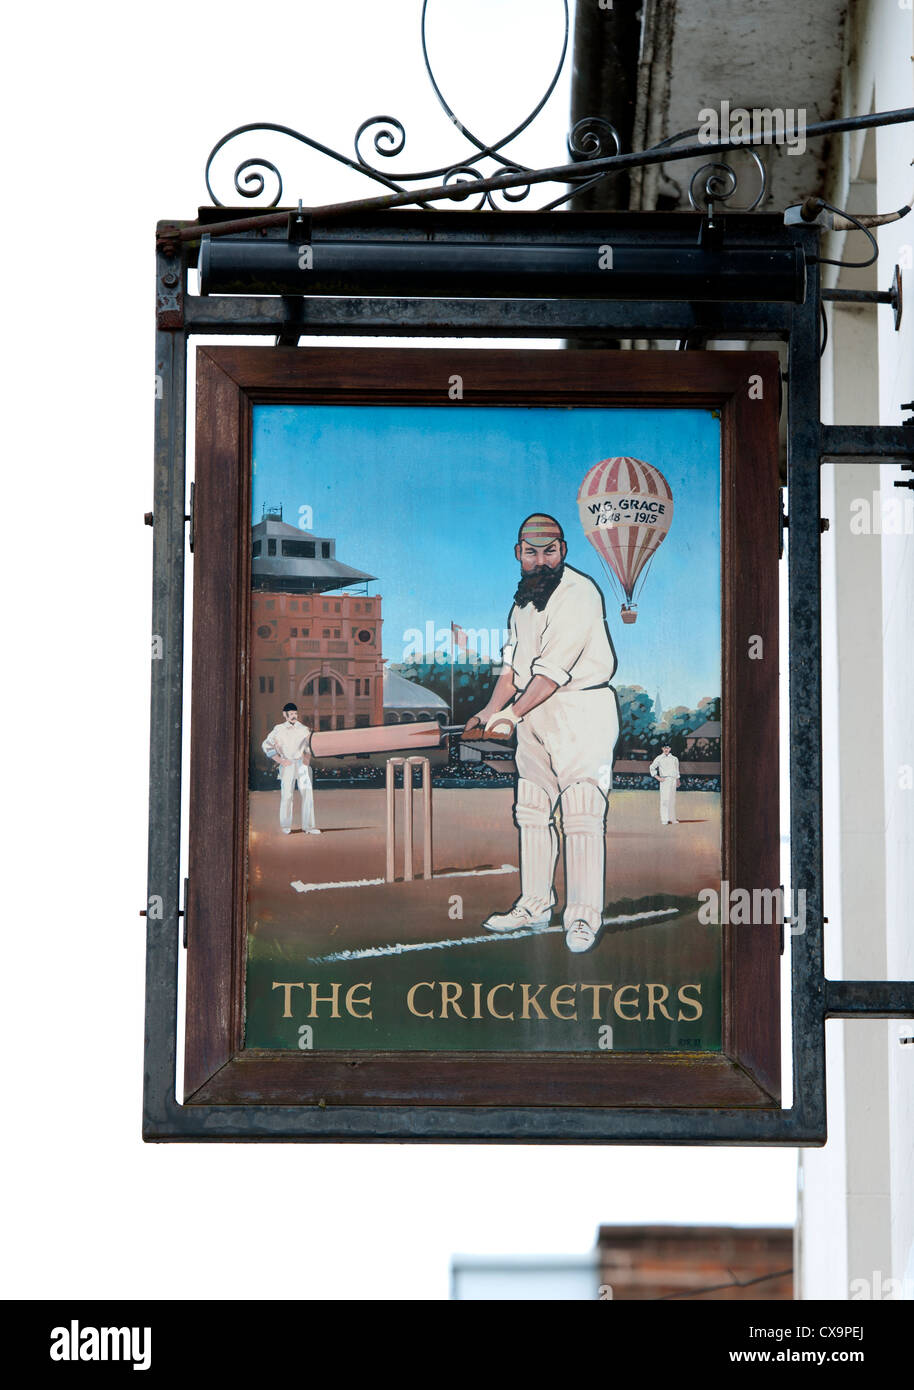 The Cricketers pub sign, Leamington Spa, UK Stock Photo